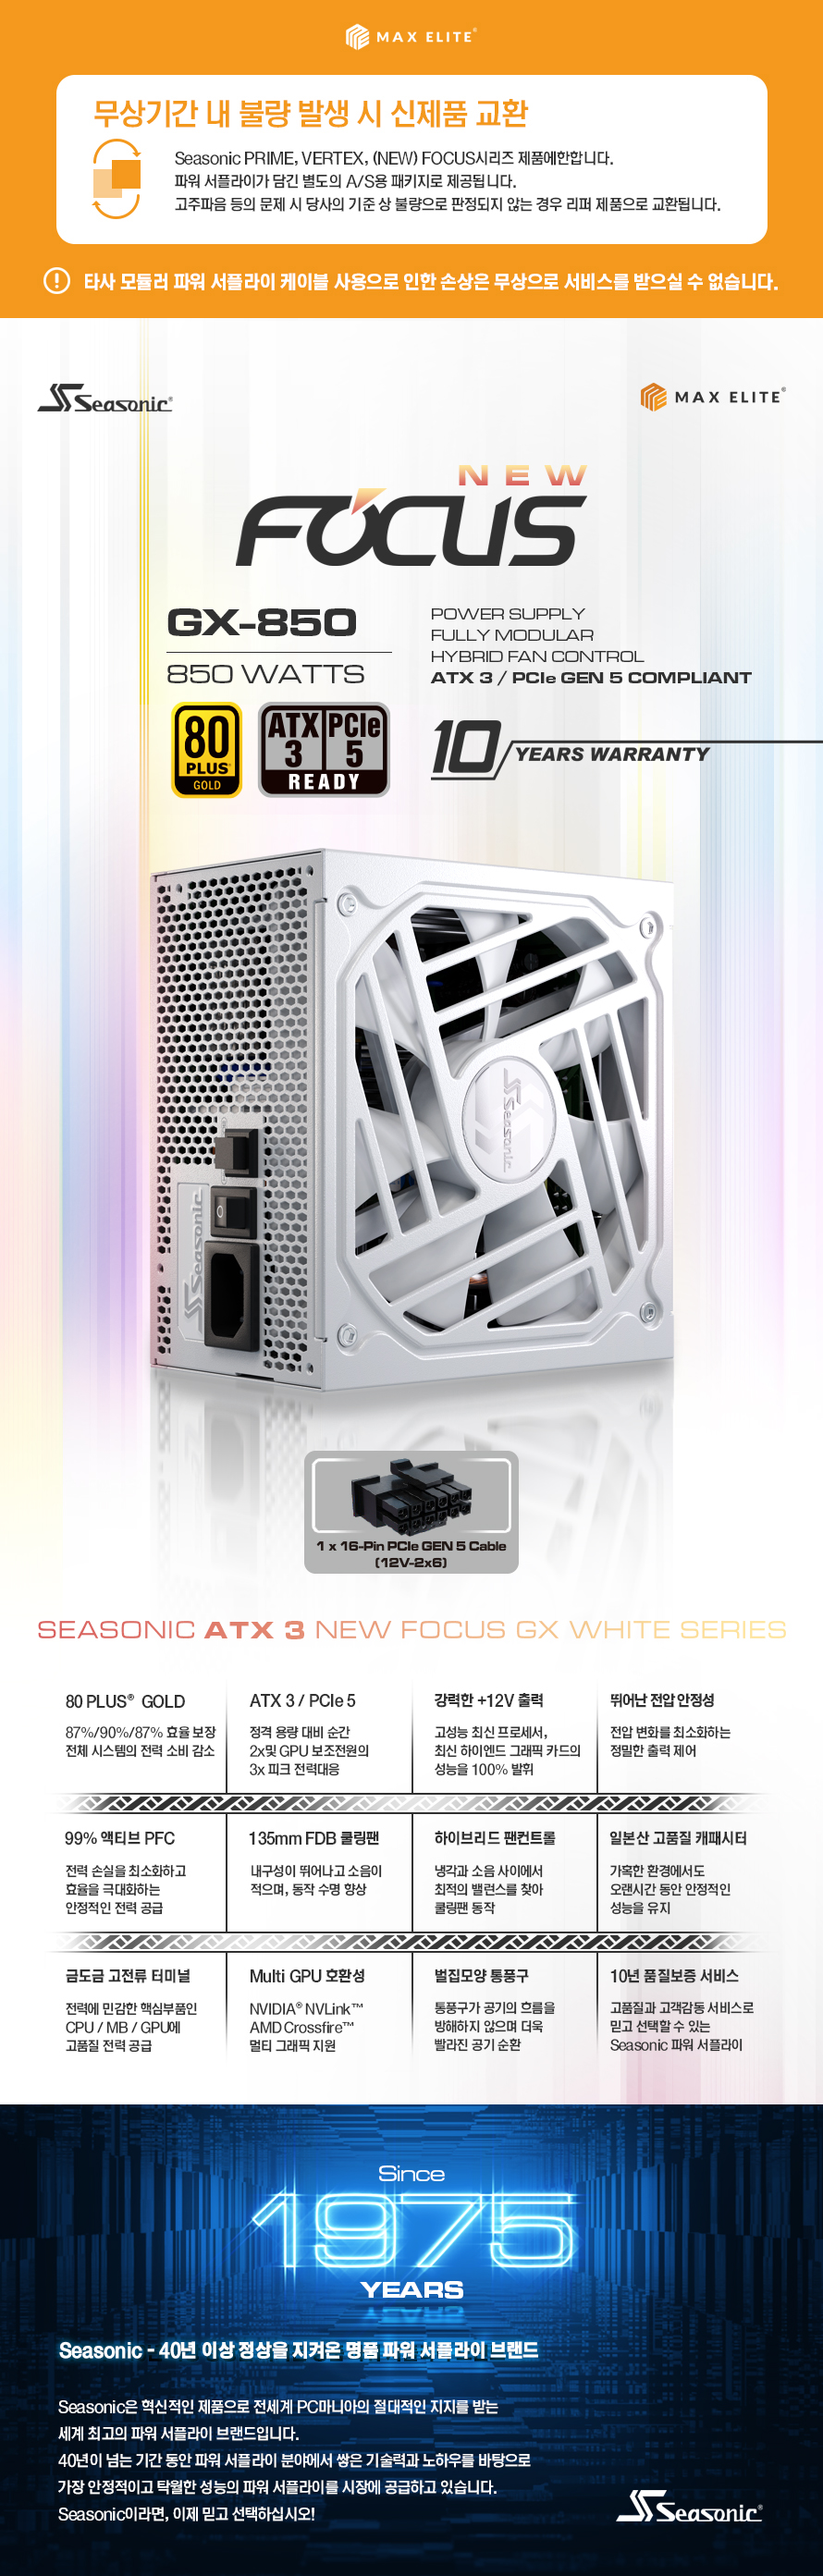 NEW FOCUS GX-850 WHITE ATX 3.0 Top.jpg